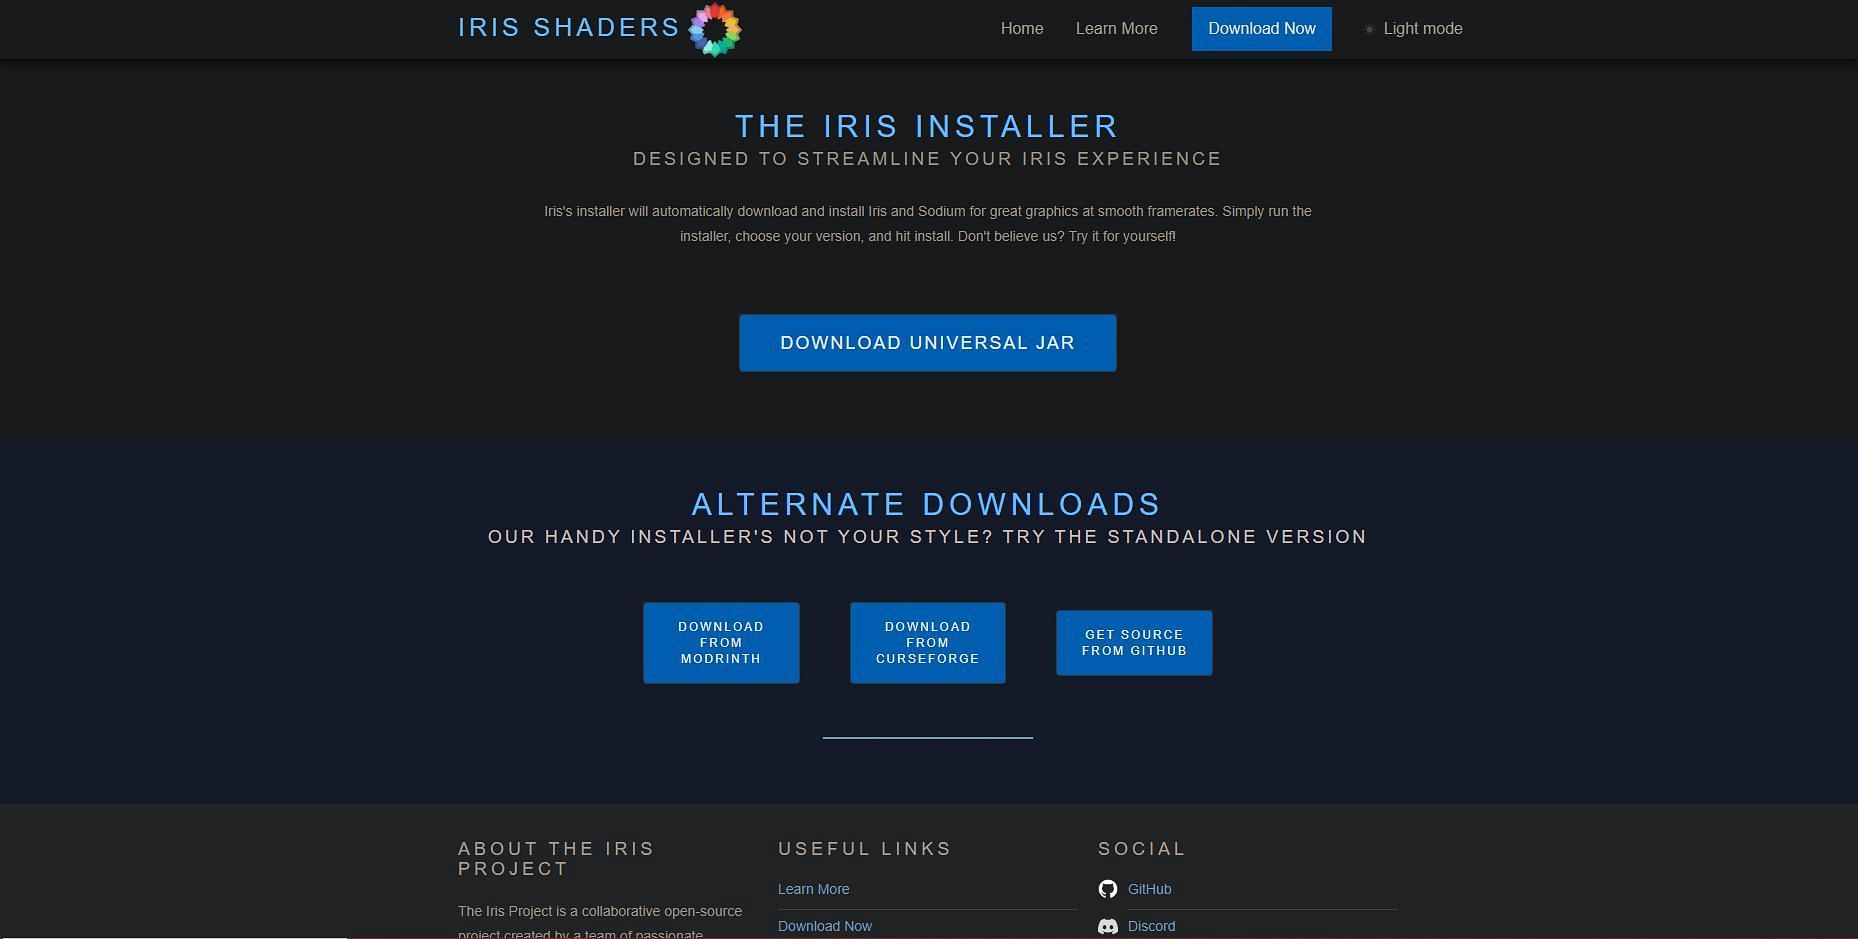 The Iris Shader download page (Image via irisshaders.net)